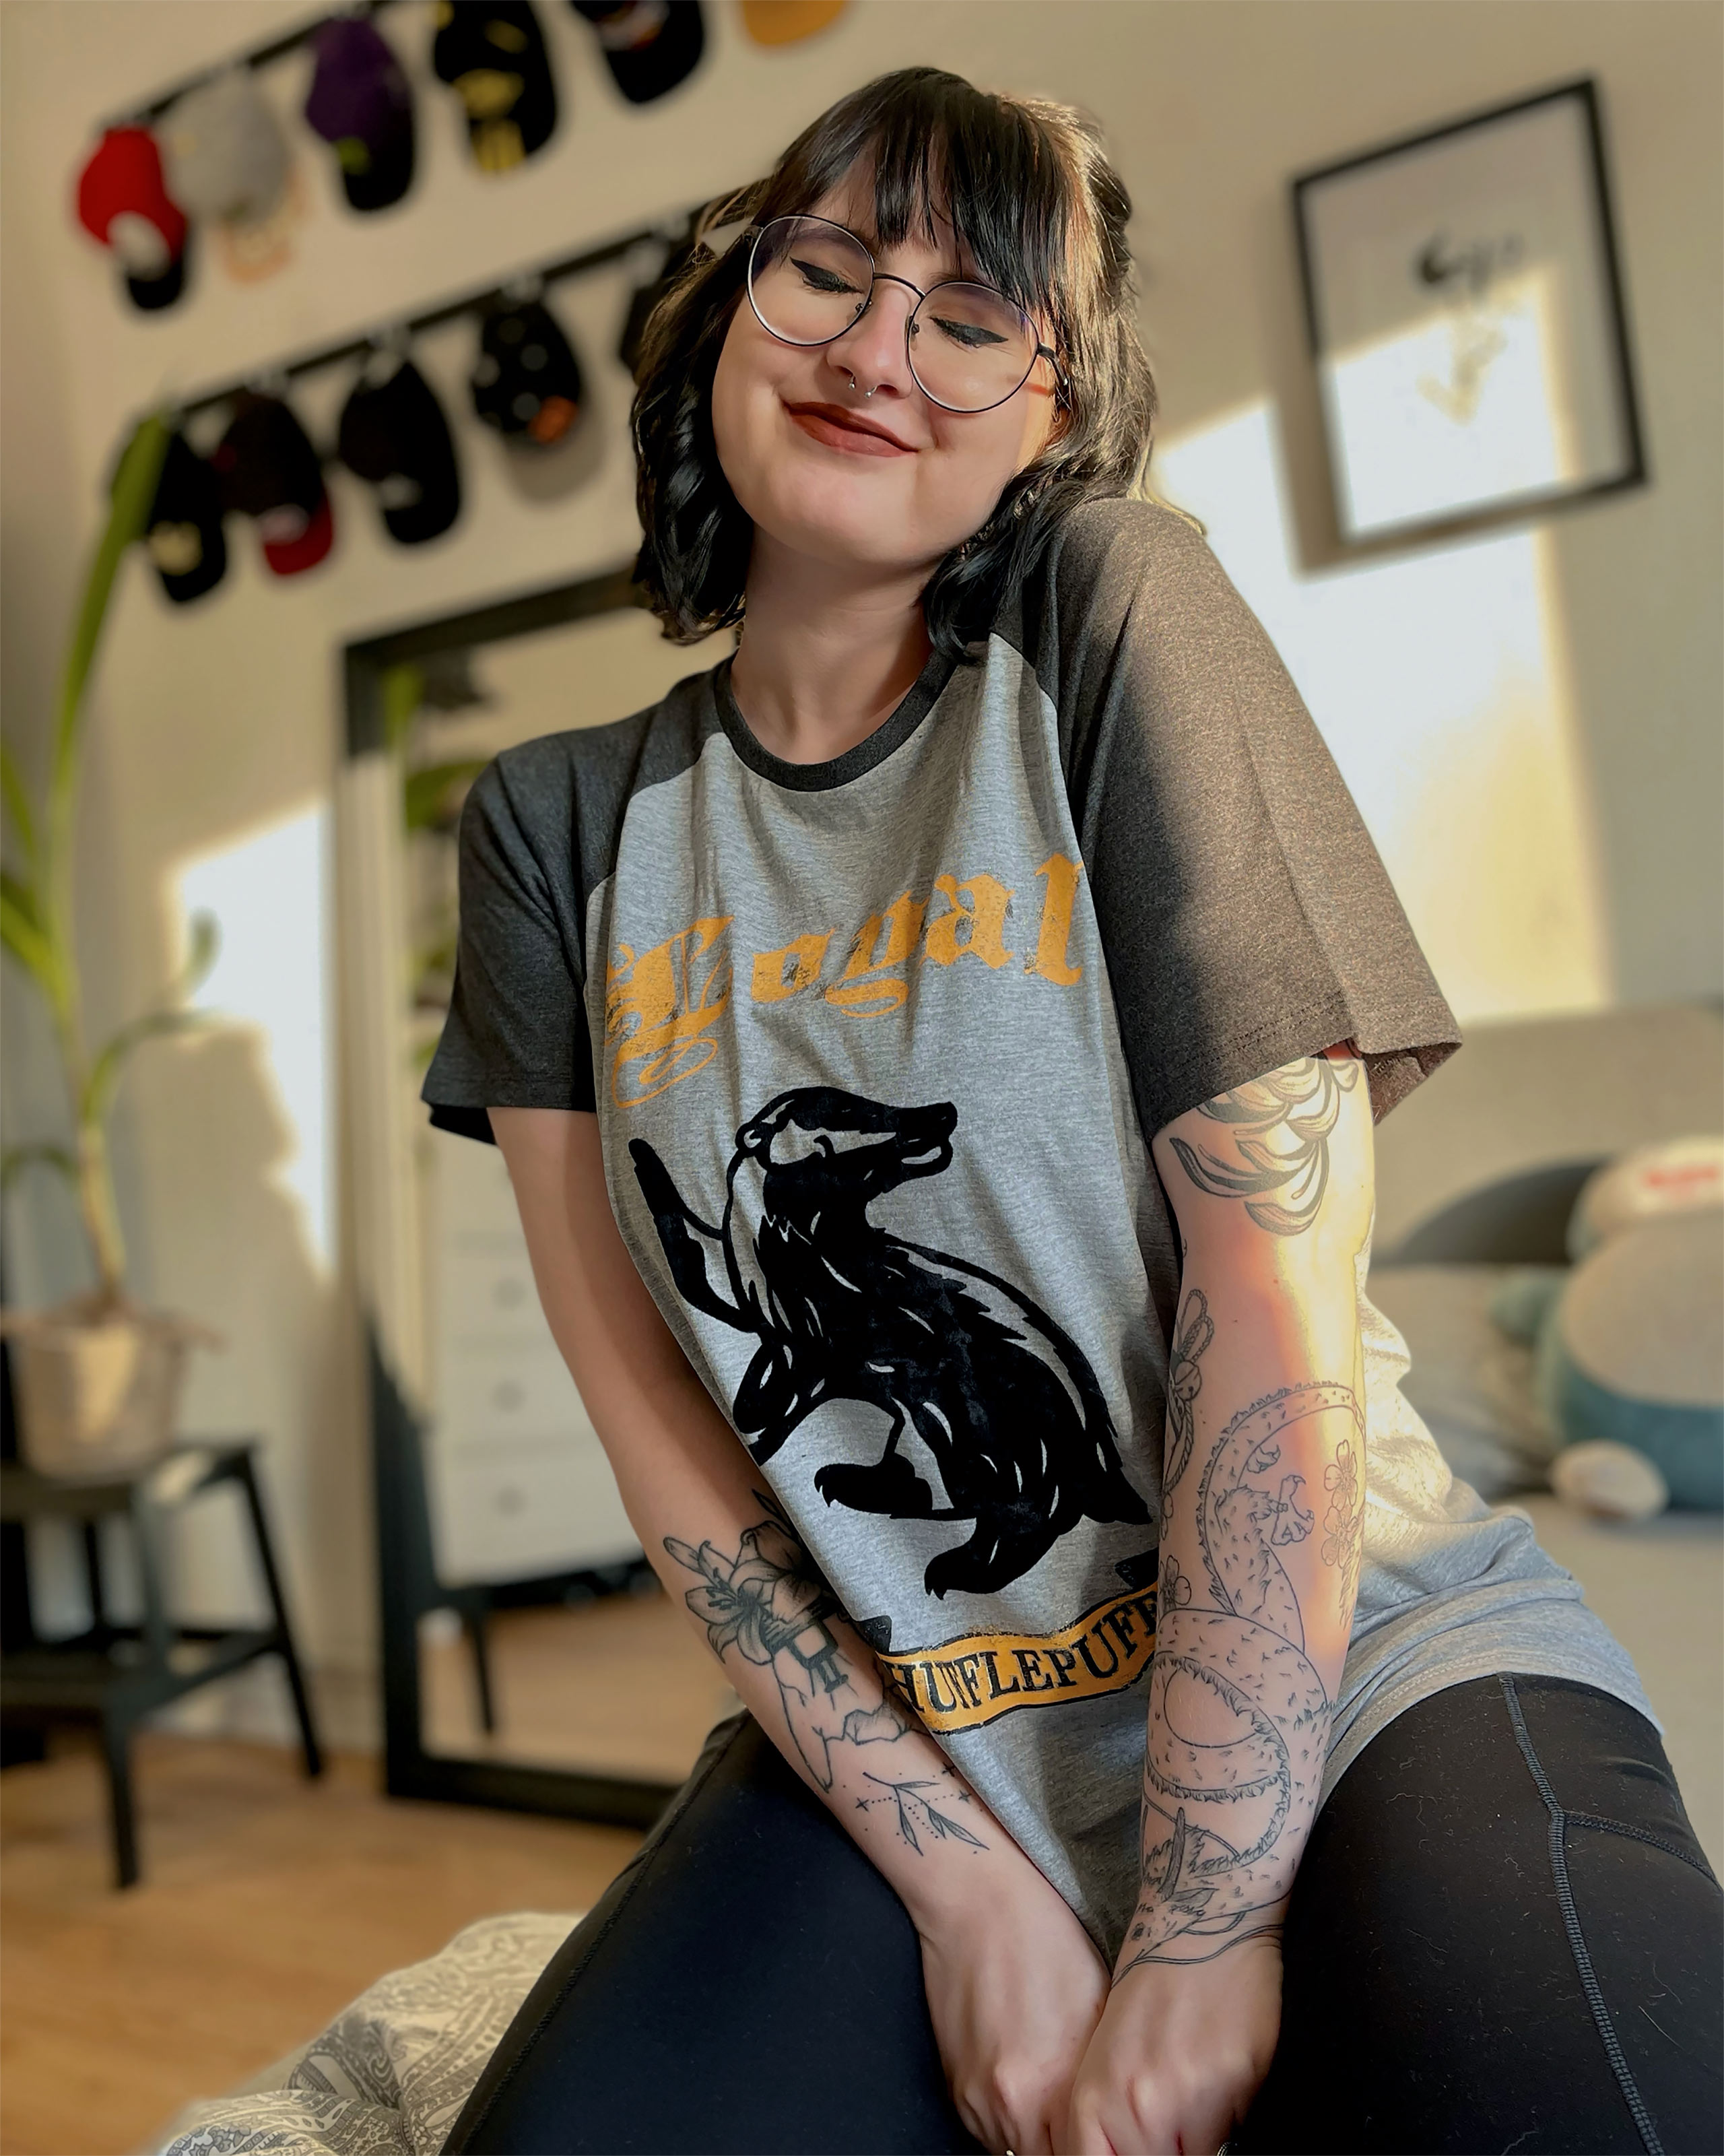 Harry Potter - T-shirt Hufflepuff Loyal gris